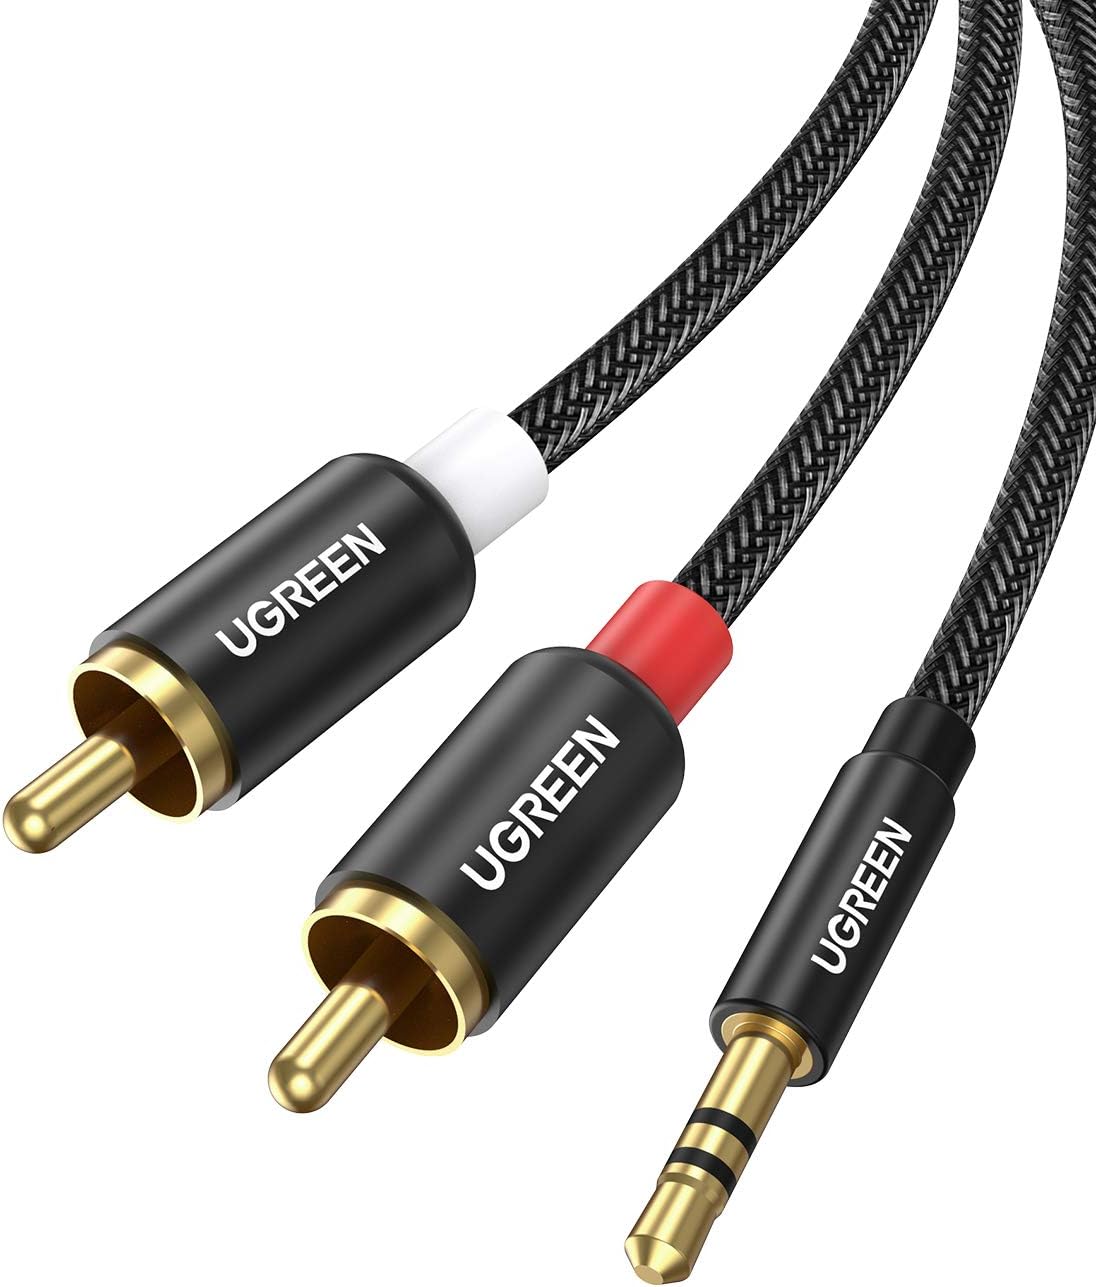 UGREEN Cable Adaptador 3.5 mm a 2 RCA, Cable Audio Estéreo con Trenzado de Nailon Compatible con Celular, iPad, iPod, TV Inteligente, Reproductor MP3, Tableta, PC al Amplificador, 1M